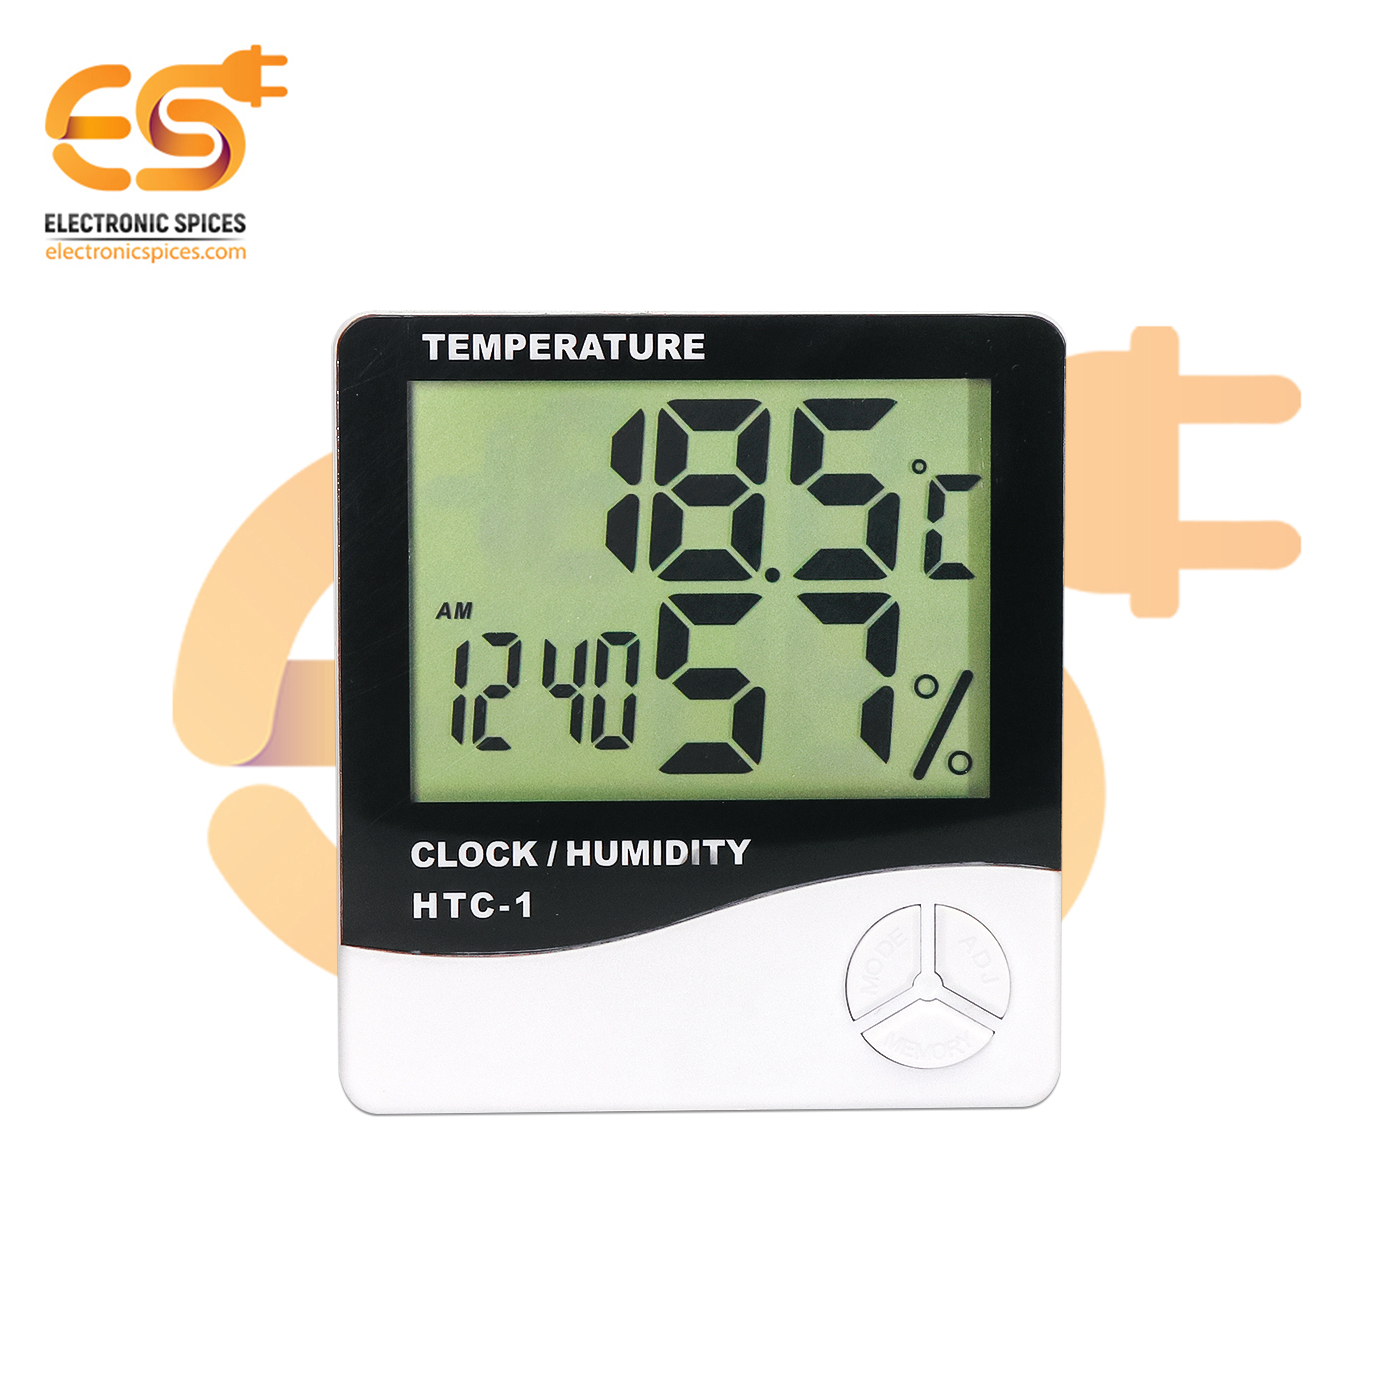 DiscountSeller Digital LCD Display Temperature Thermometer Humidity Hygrometer Meter with Clock Calendar Alarm 